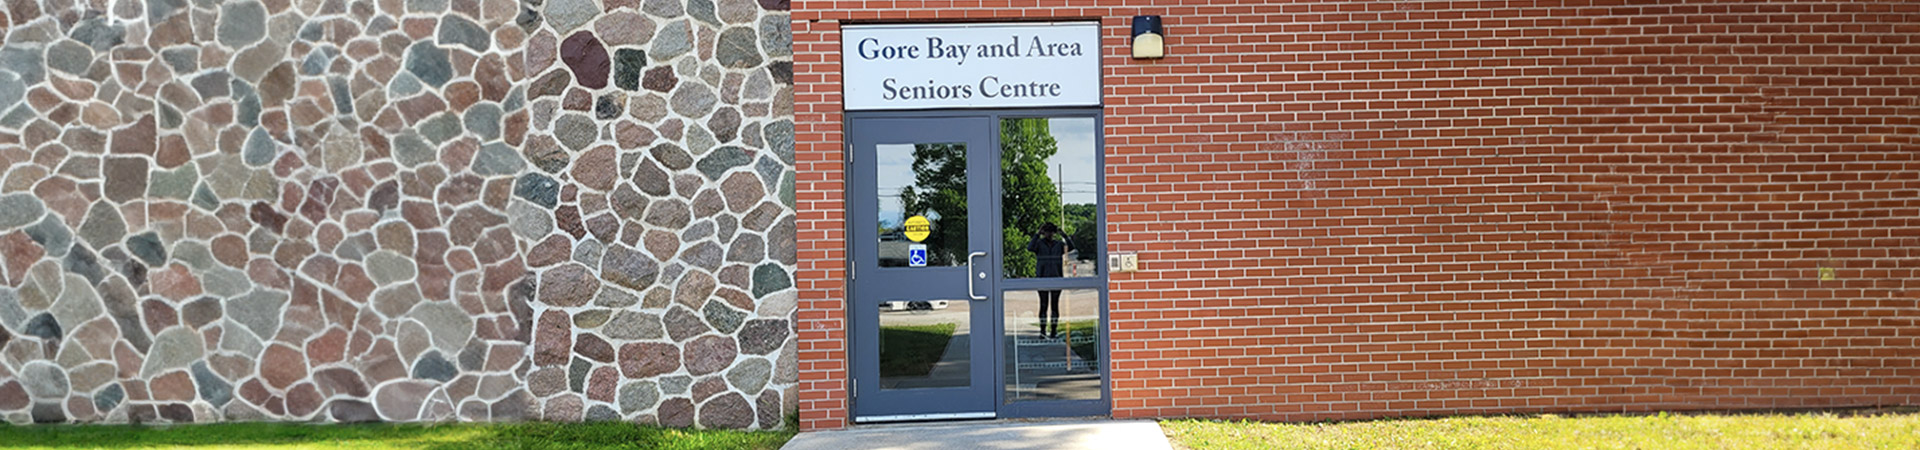 Gore Bay & Area Seniors Centre